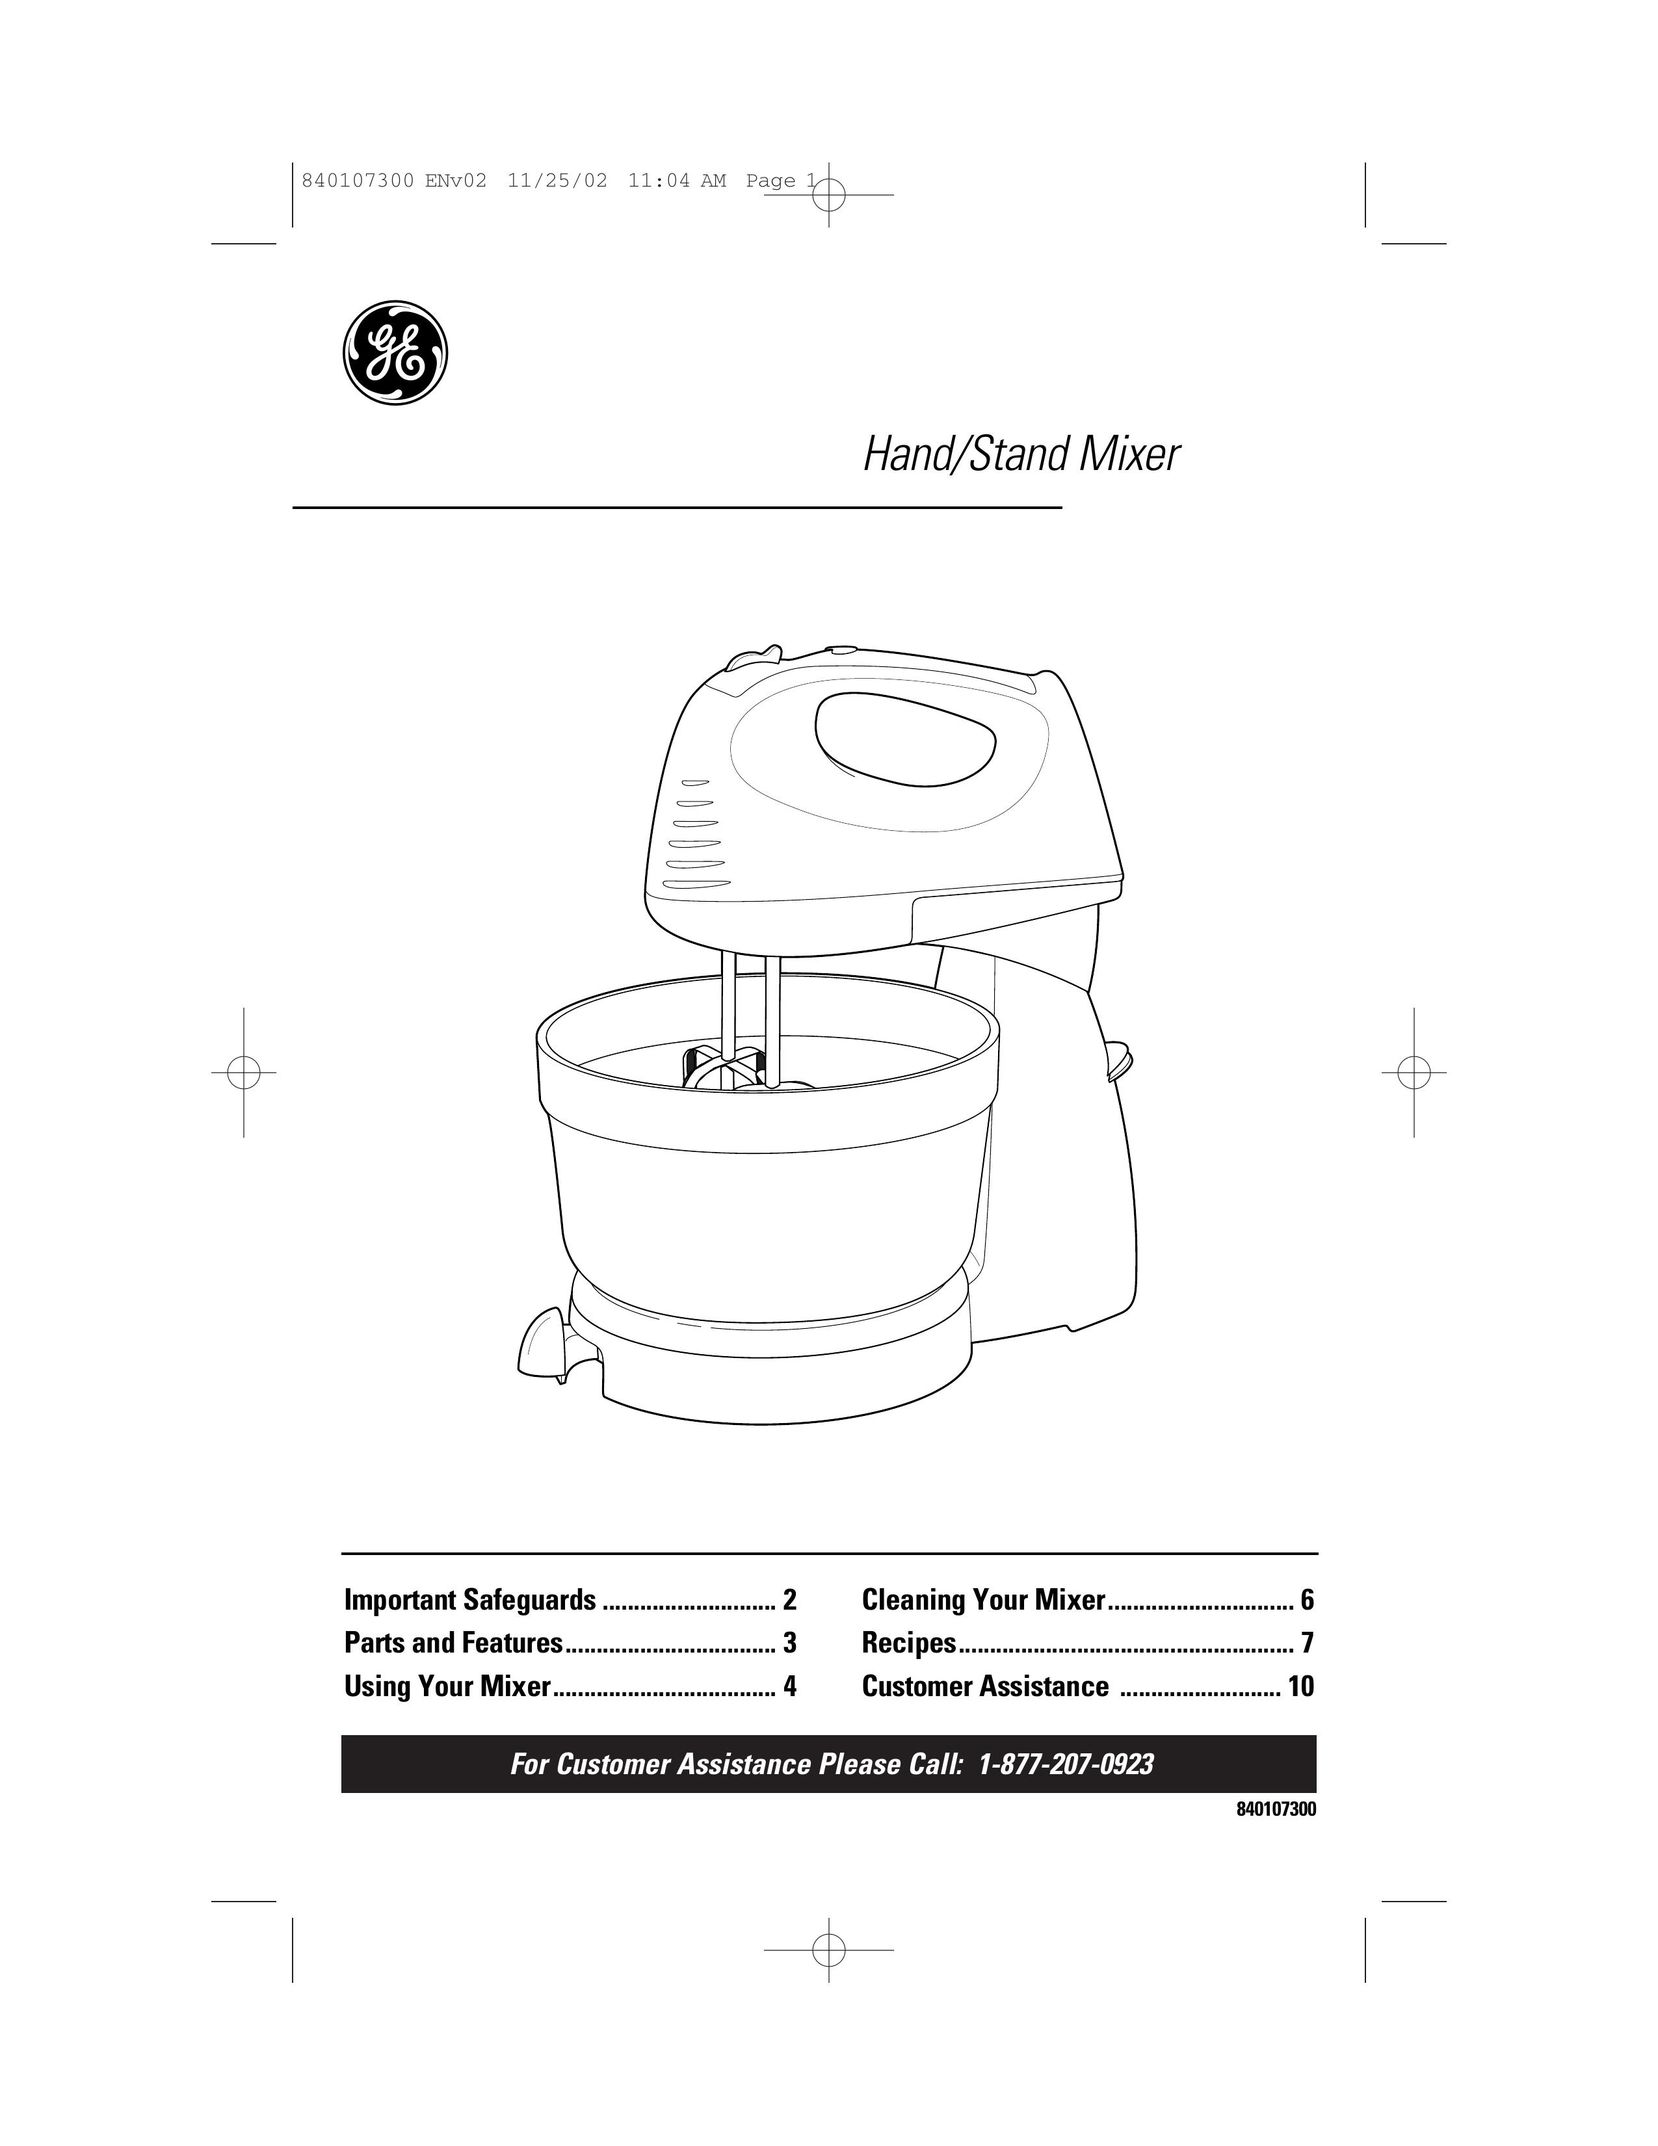 GE 106772 Mixer User Manual